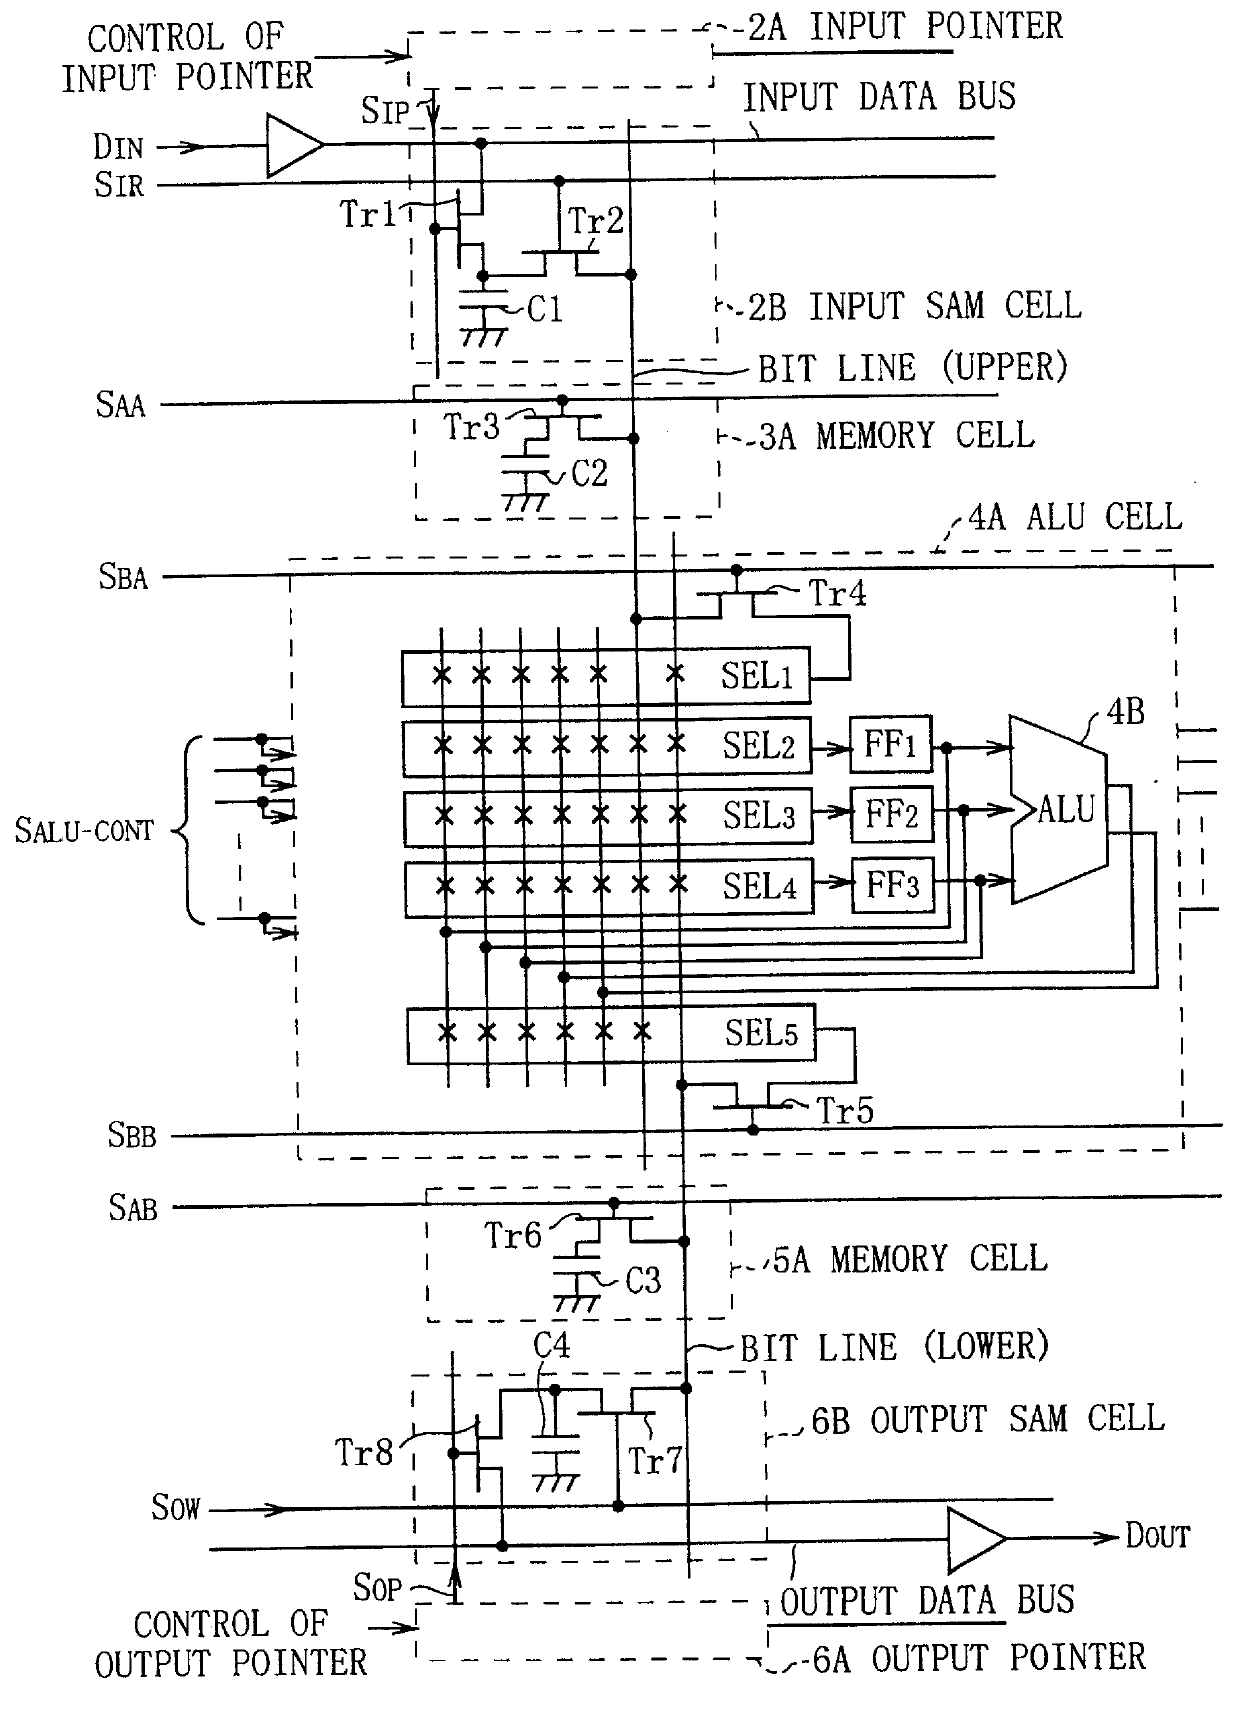 Signal processing apparatus